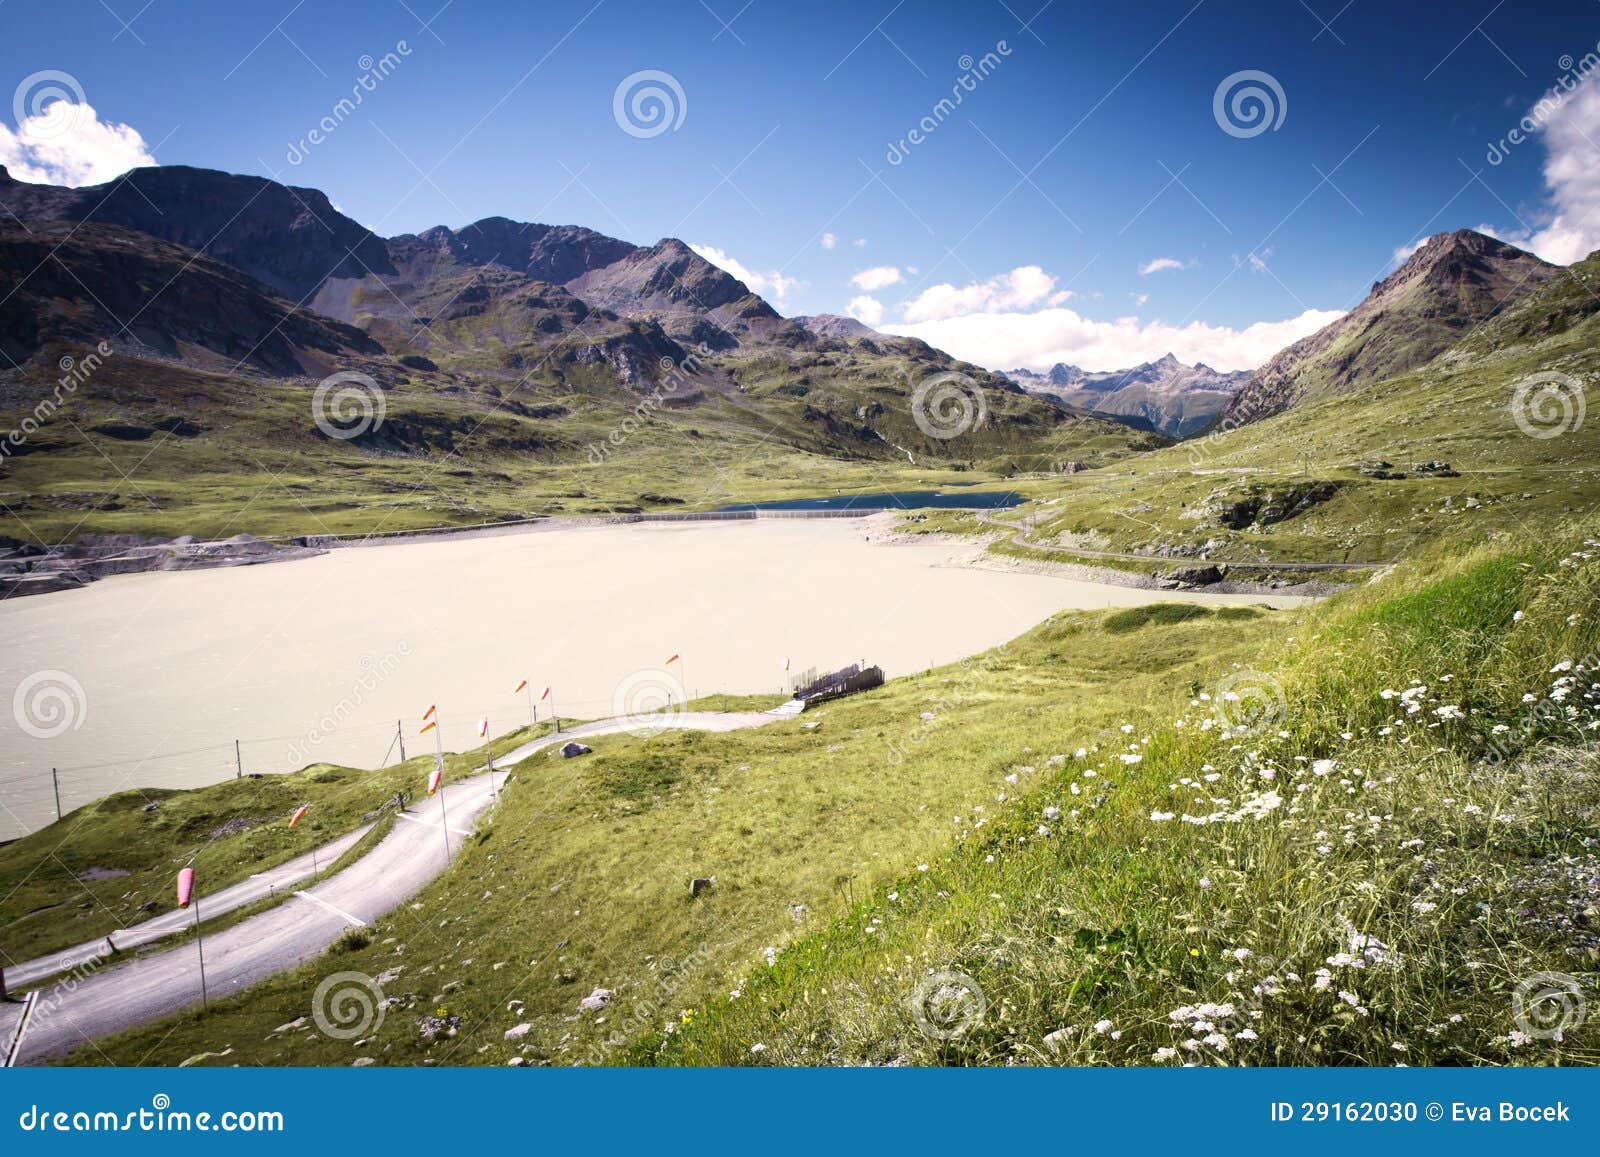 bernina mountain pass in swiss alps near st. moritz